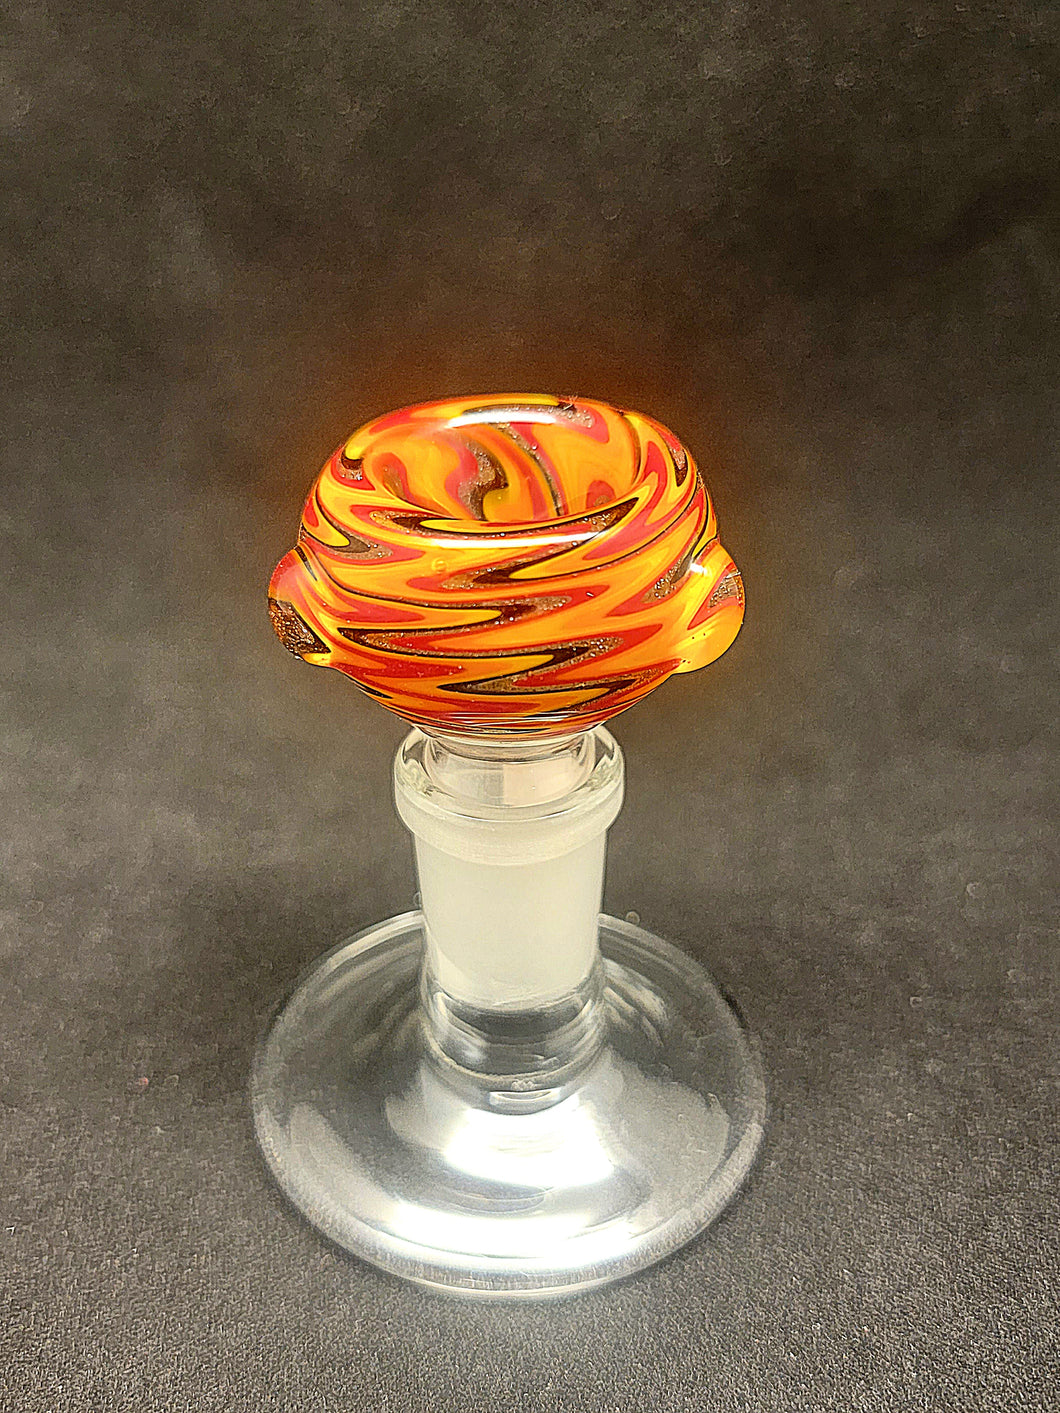 Pho_Sco Glass Wig Wag Bowl Slides 14mm 1-7